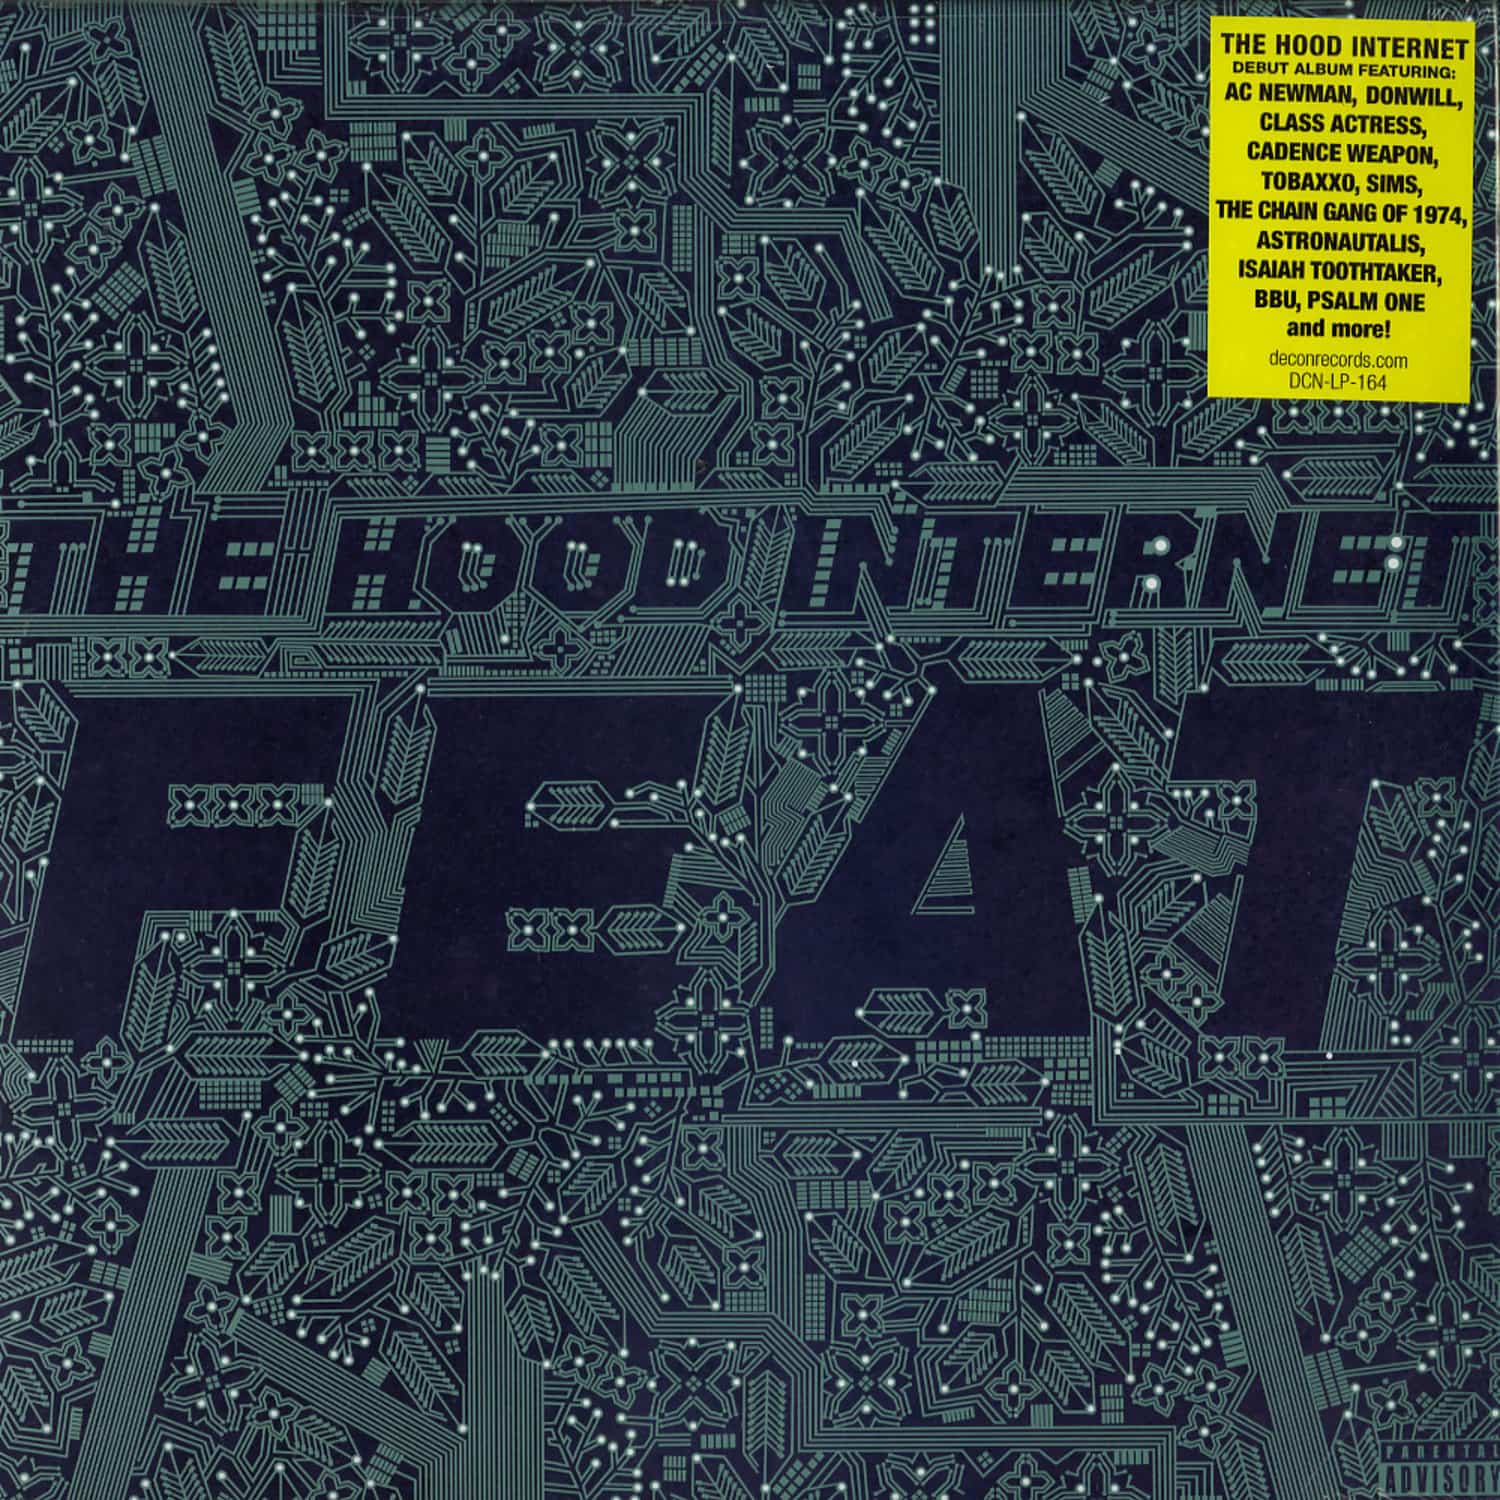 The Hood Internet - FEAT 